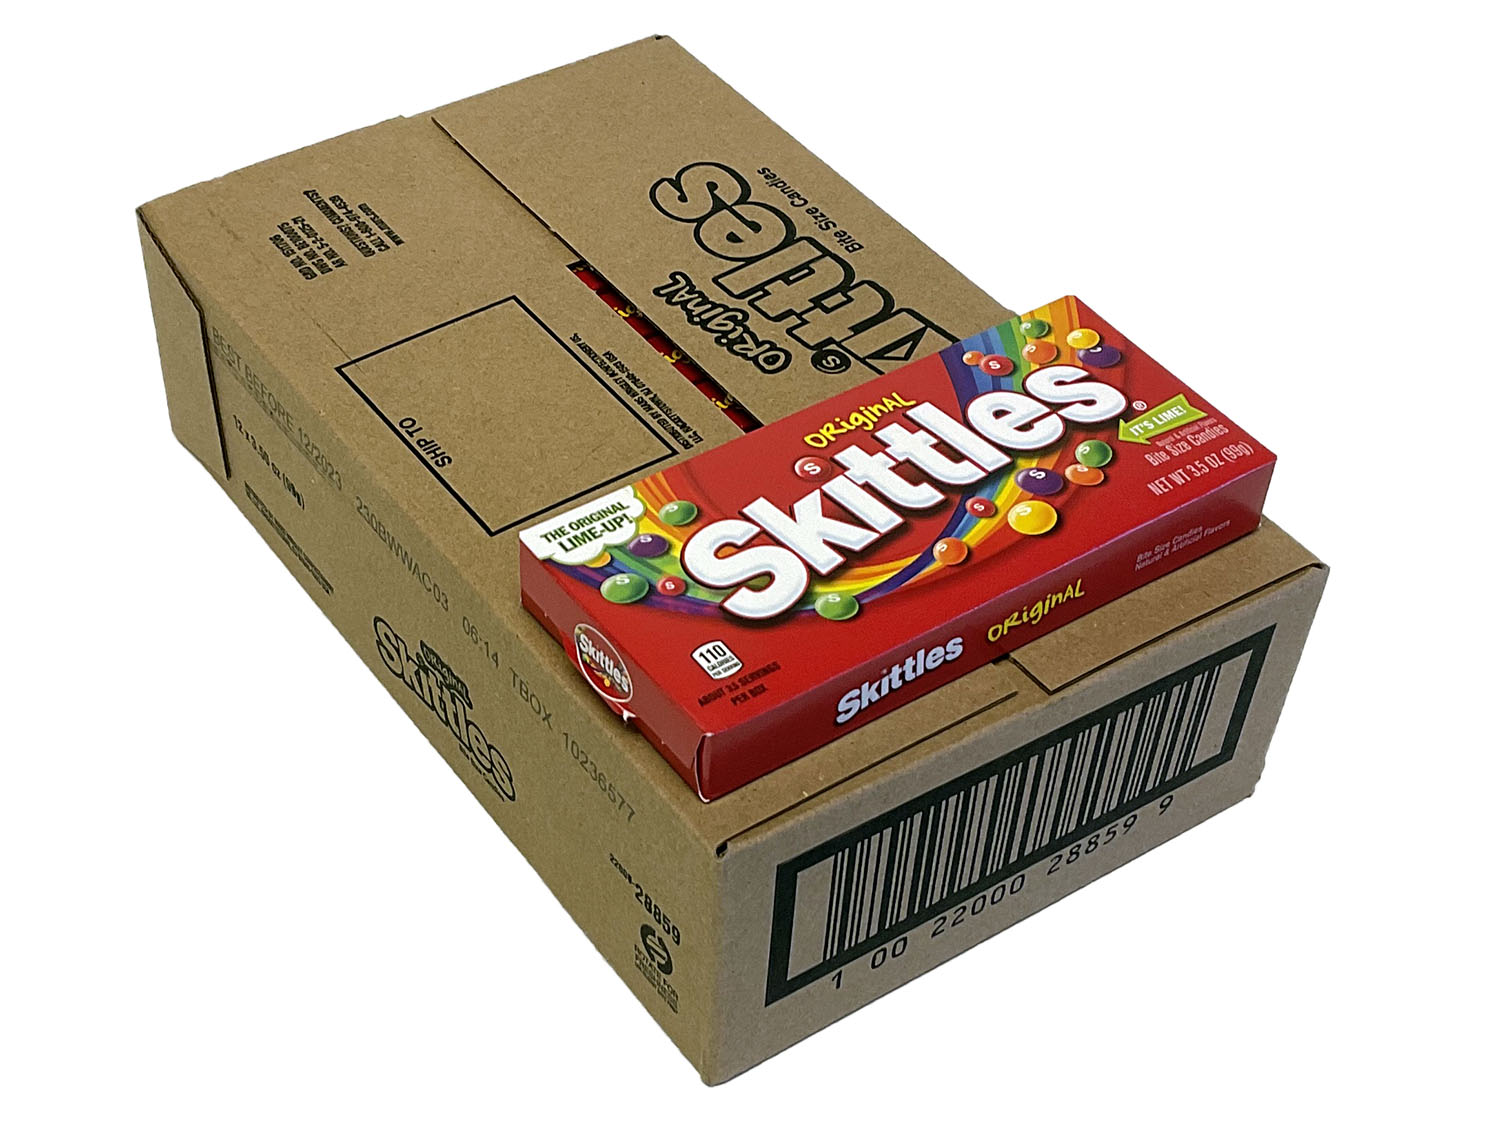 Skittles Original - 3.5 oz theater box - case of 12